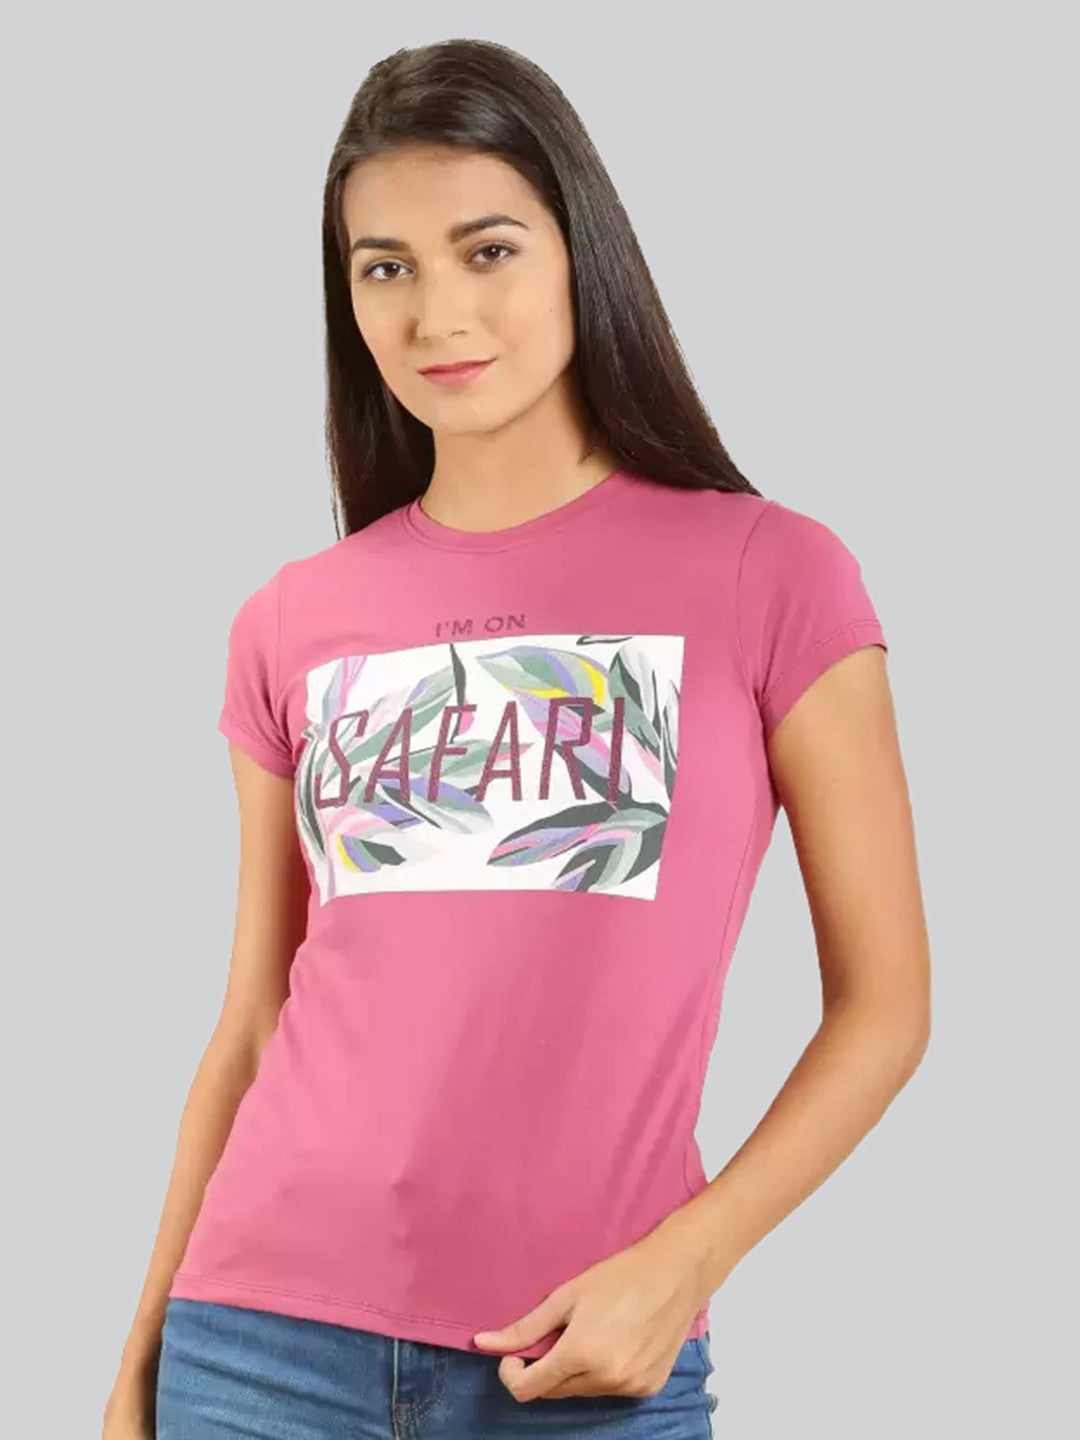 Pink Printed Round Neck T-Shirt #403